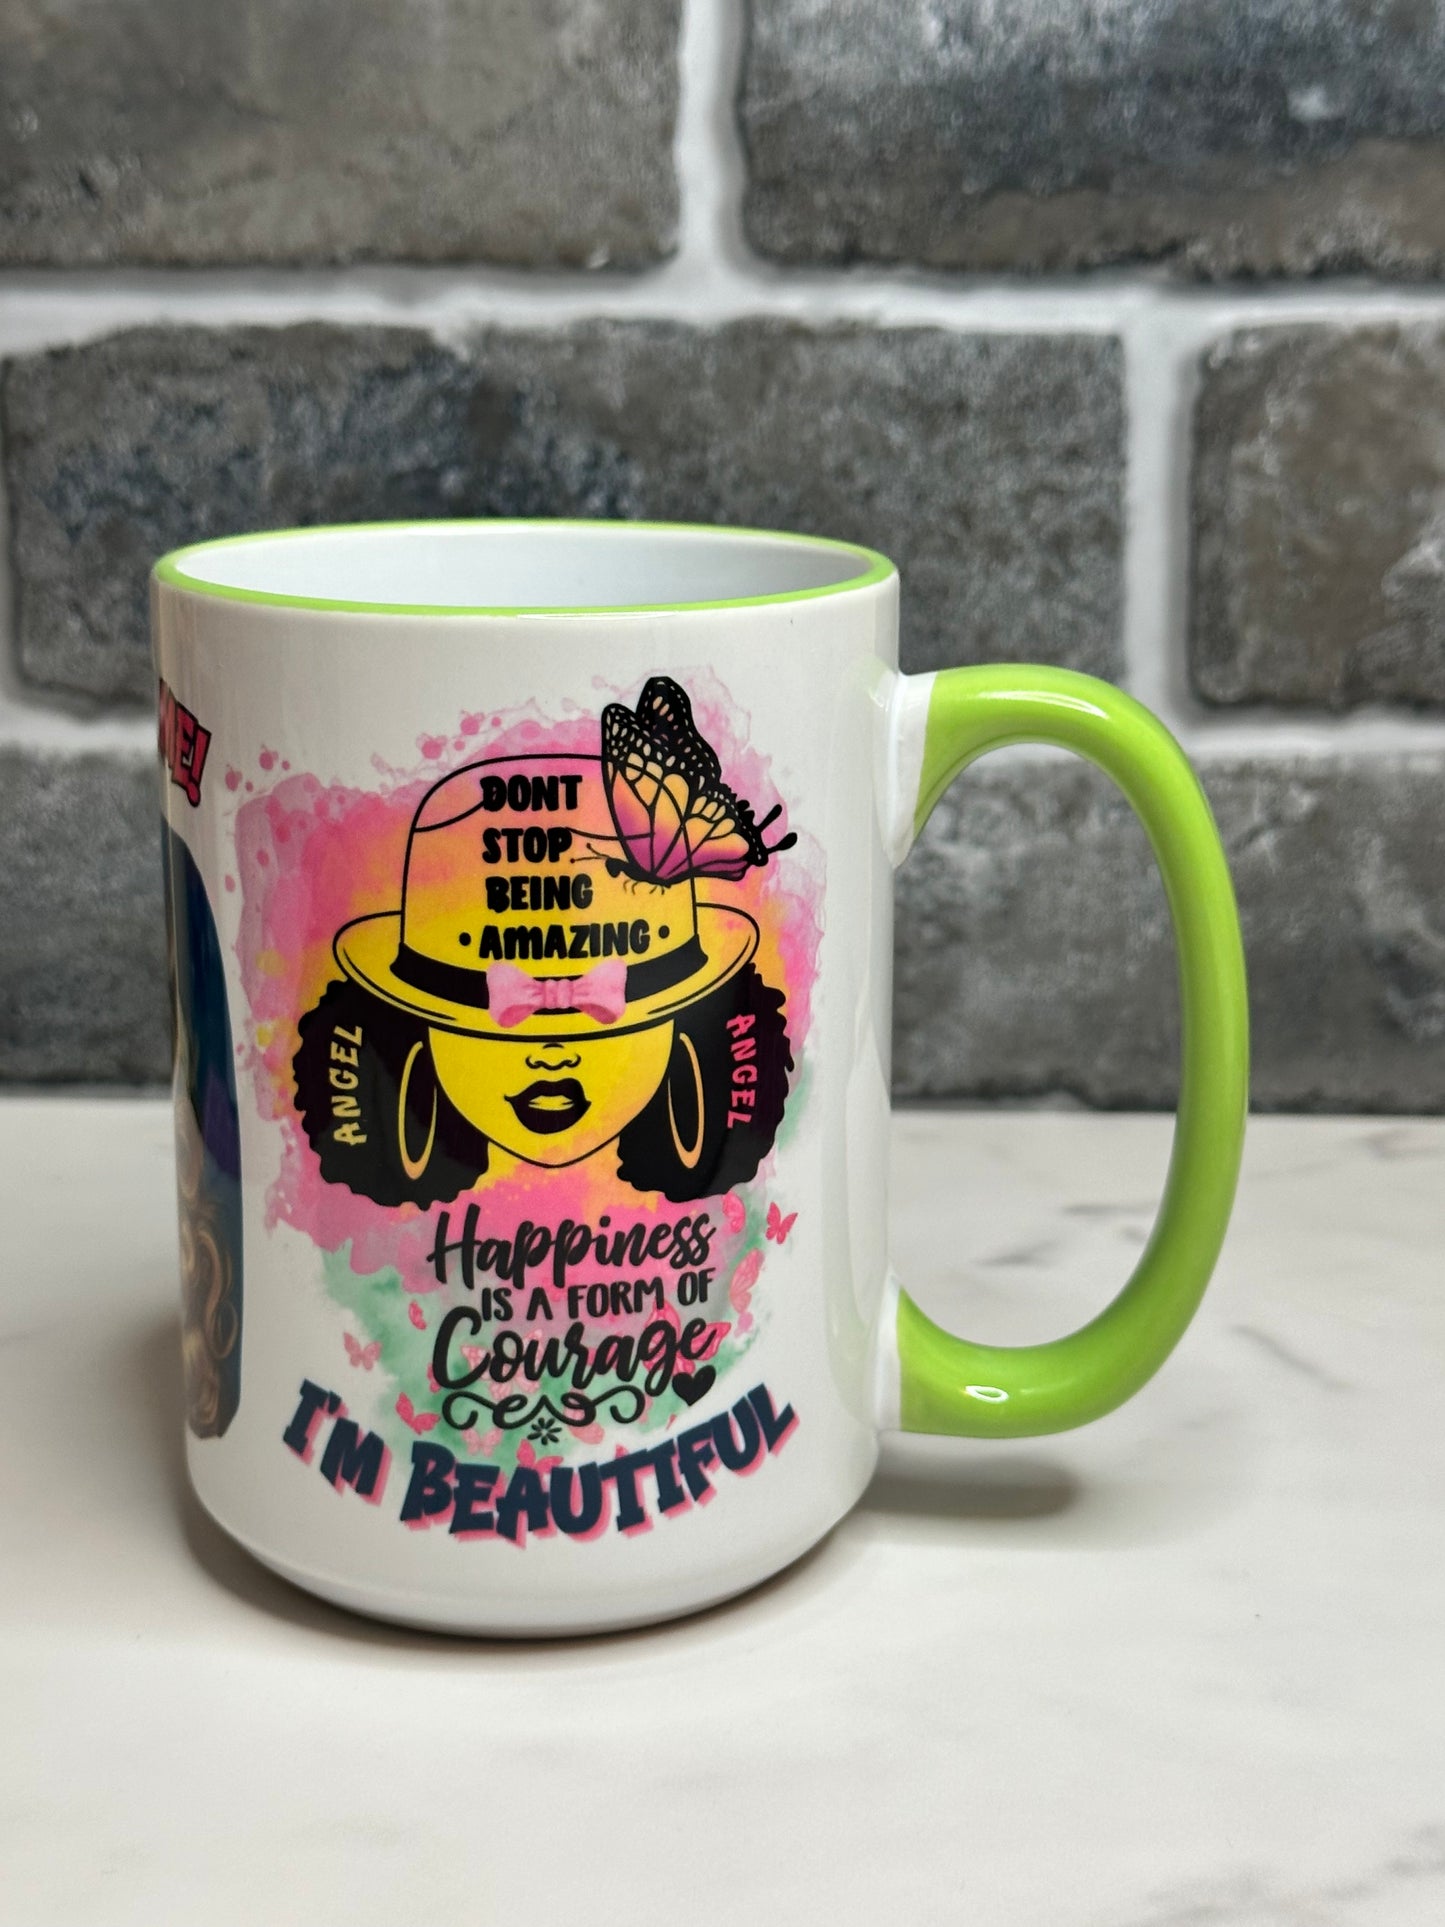 LOVE DOING ME (Personalized) 15 ounce ceramic mug